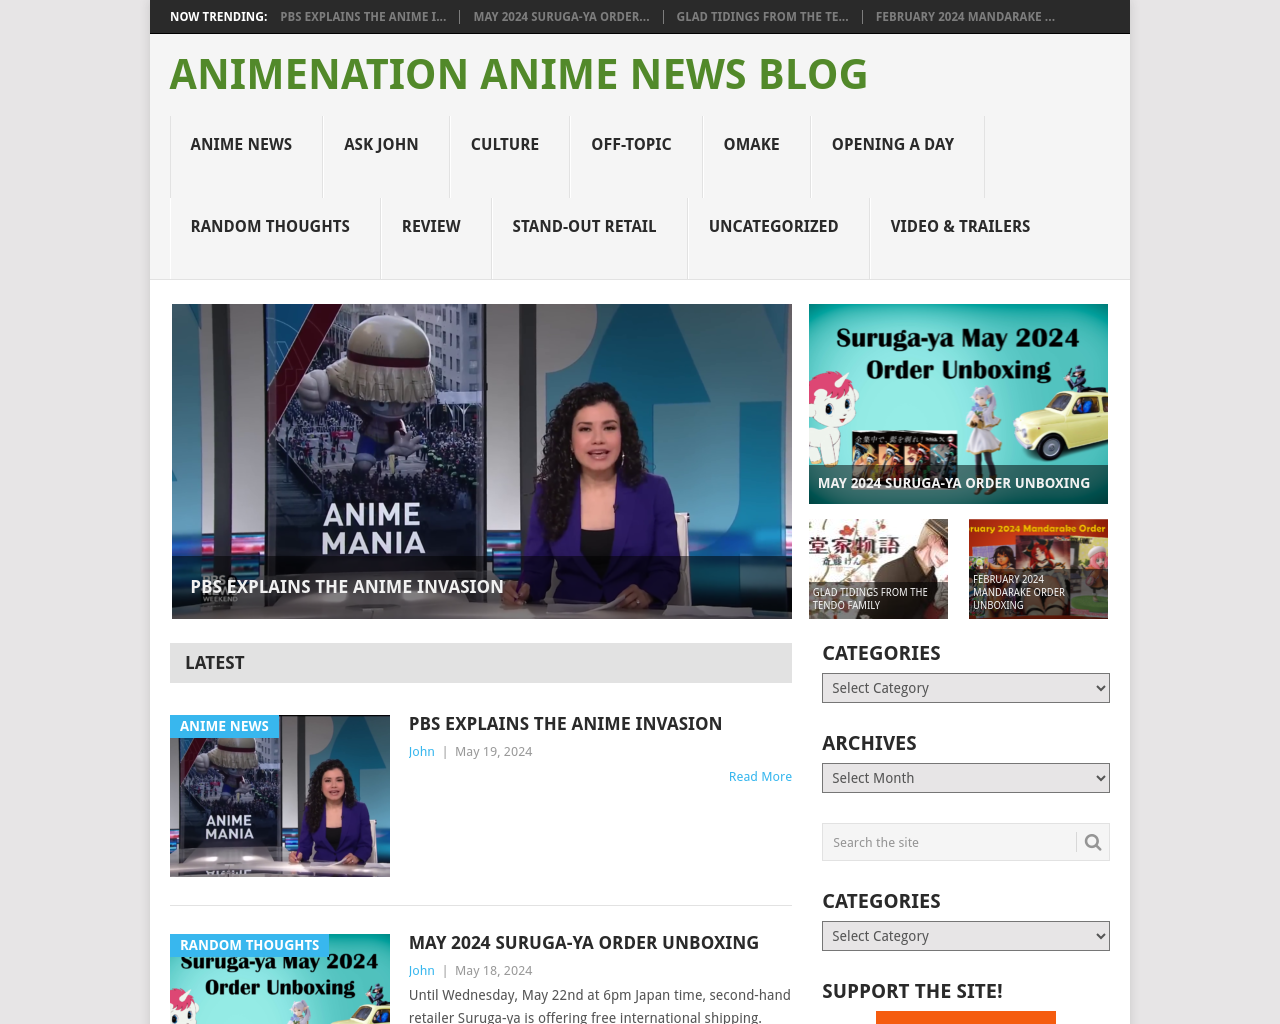 animenation.net